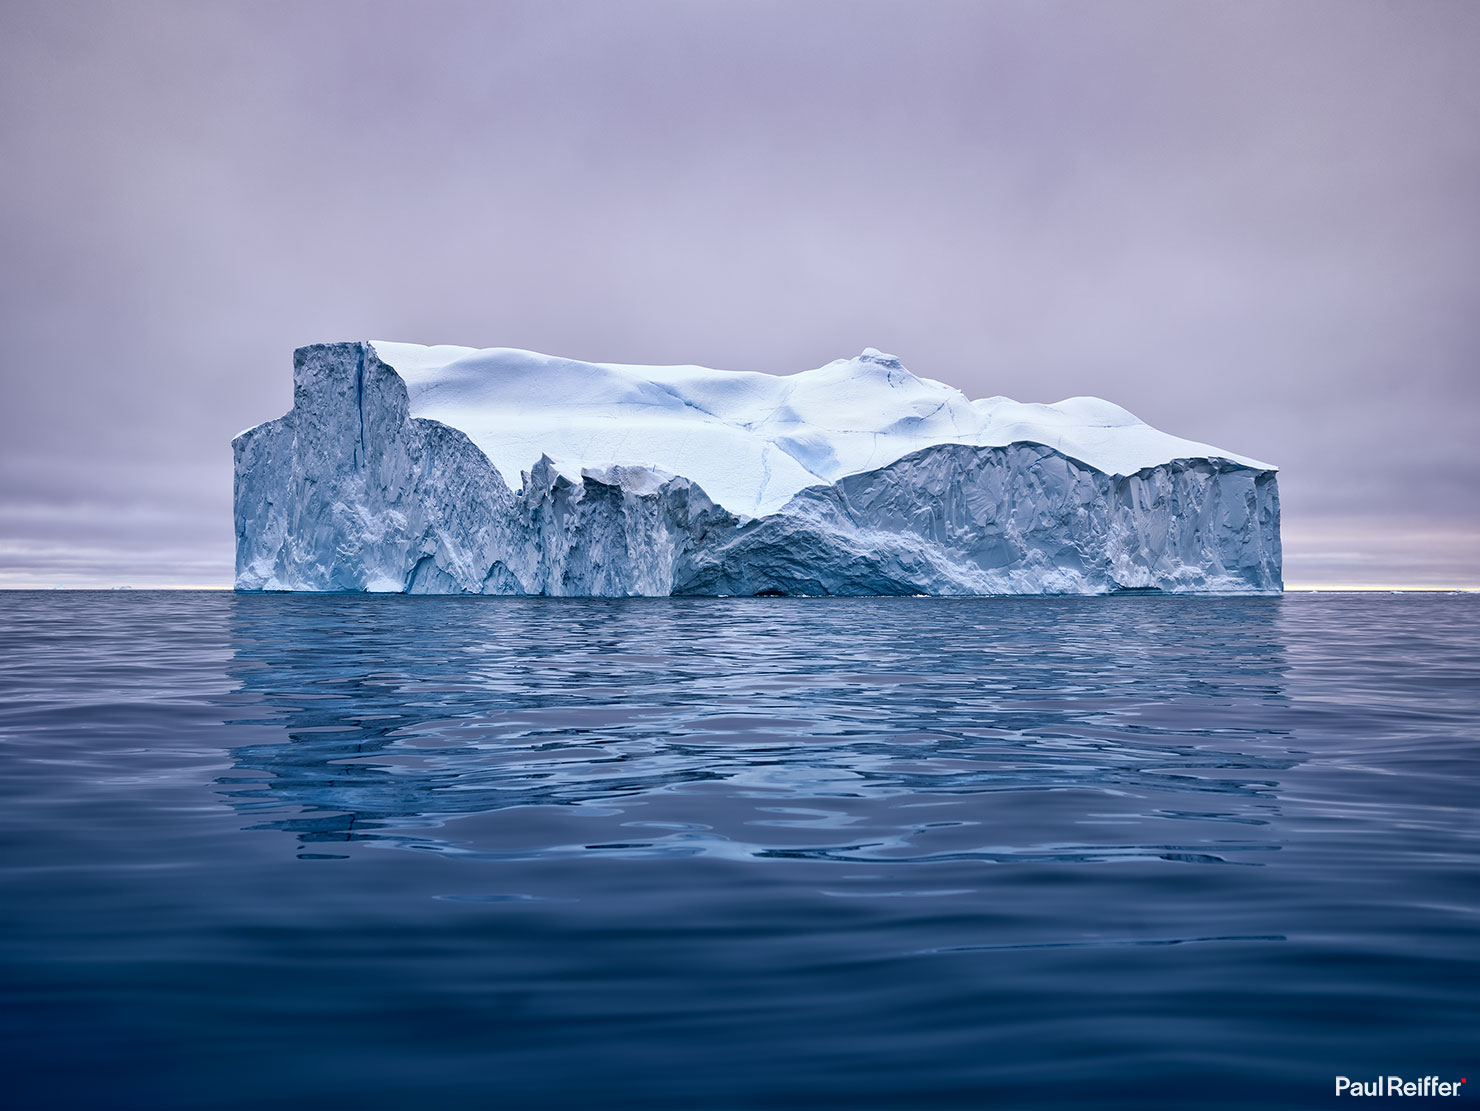 Greenland Icebergs Photography Photographing Ilulissat Glacier Disko Bay Midnight Sun Iceberg Paul Reiffer Photographer Professional Landscape Commercial Phase One Medium Format Travel Arctic